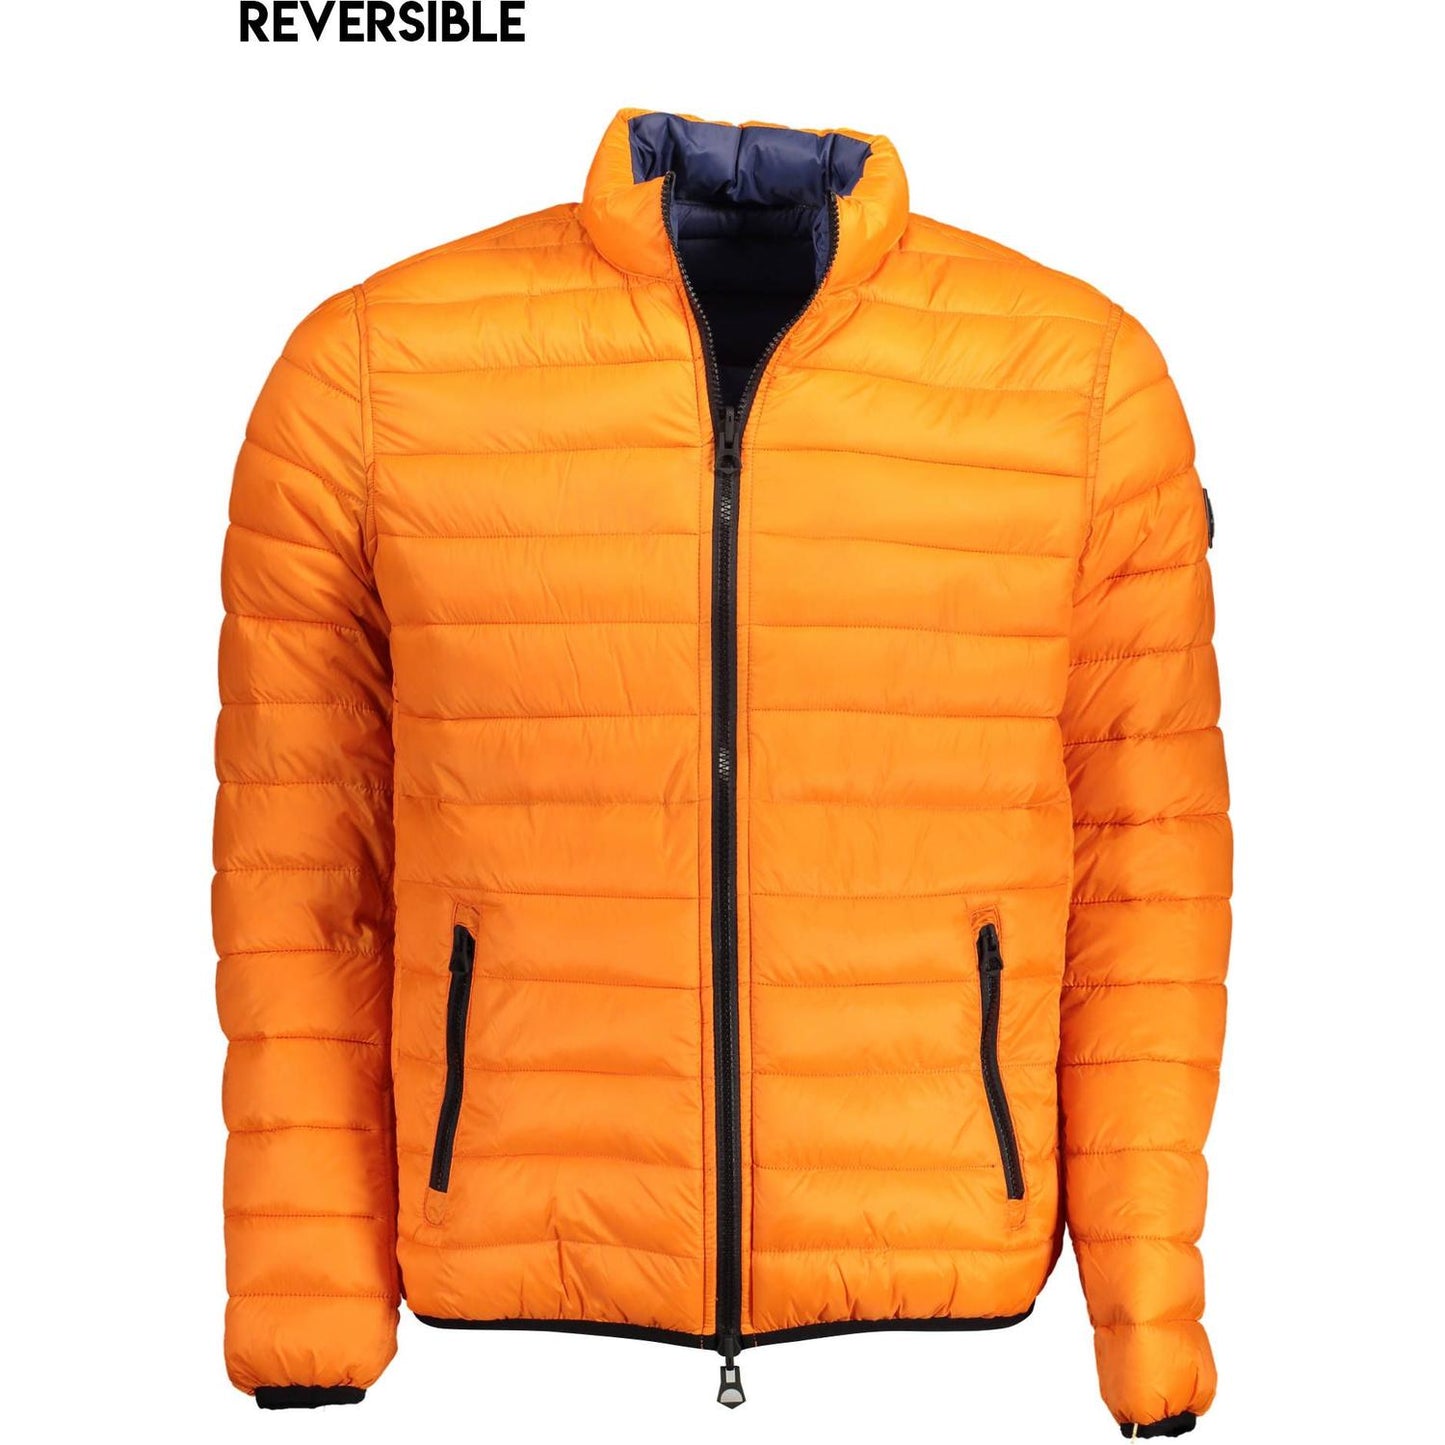 U.S. POLO ASSN. Reversible Long-Sleeve Contrasting Jacket reversible-long-sleeve-contrasting-jacket